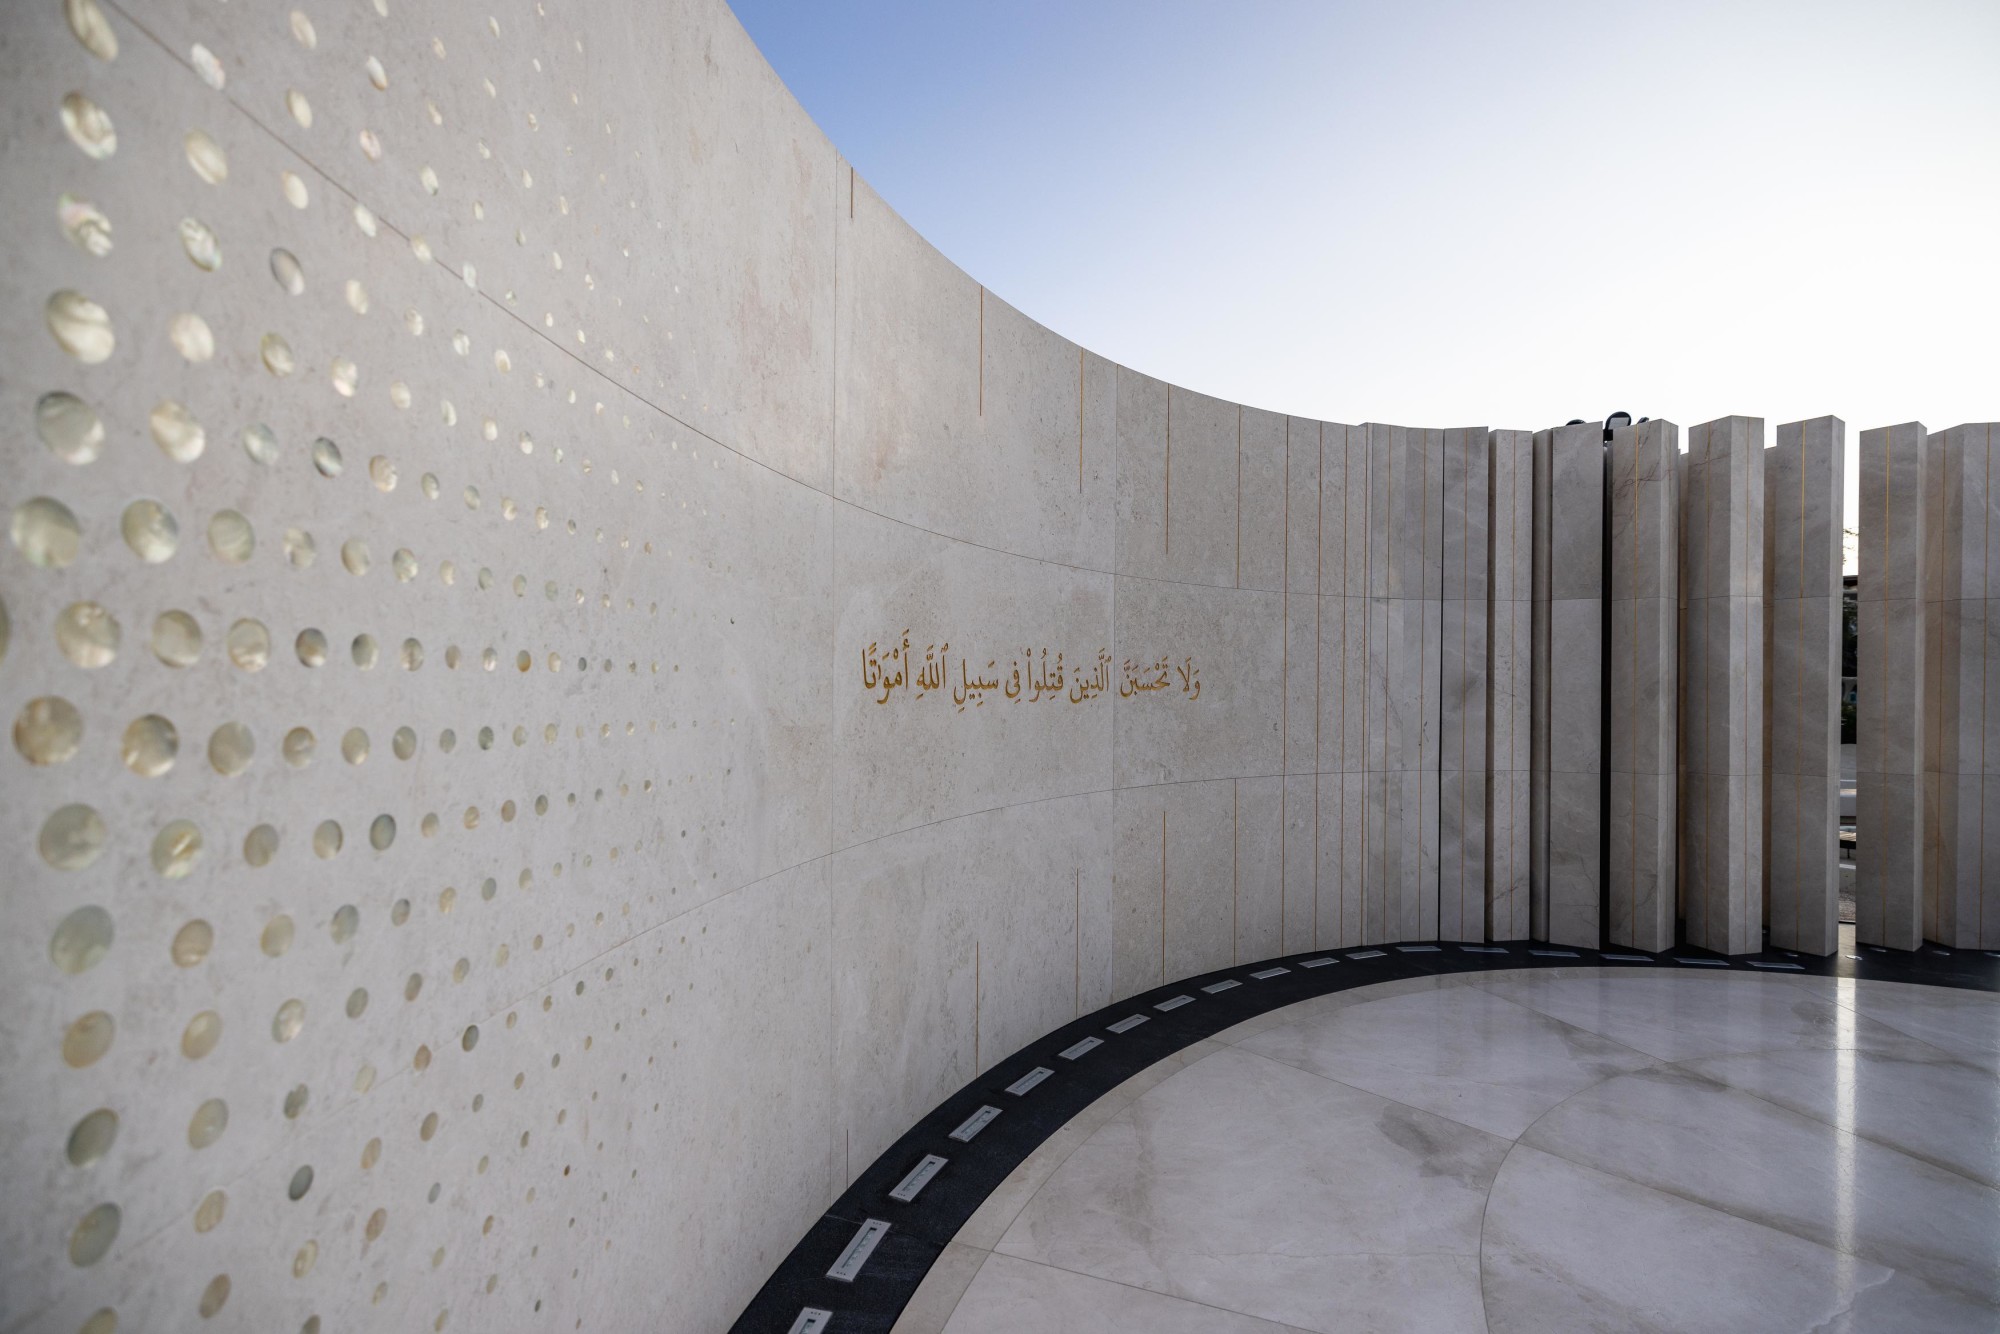 Martyr’s Sculpture Peace Memorial outside the UAE Pavilion m14795